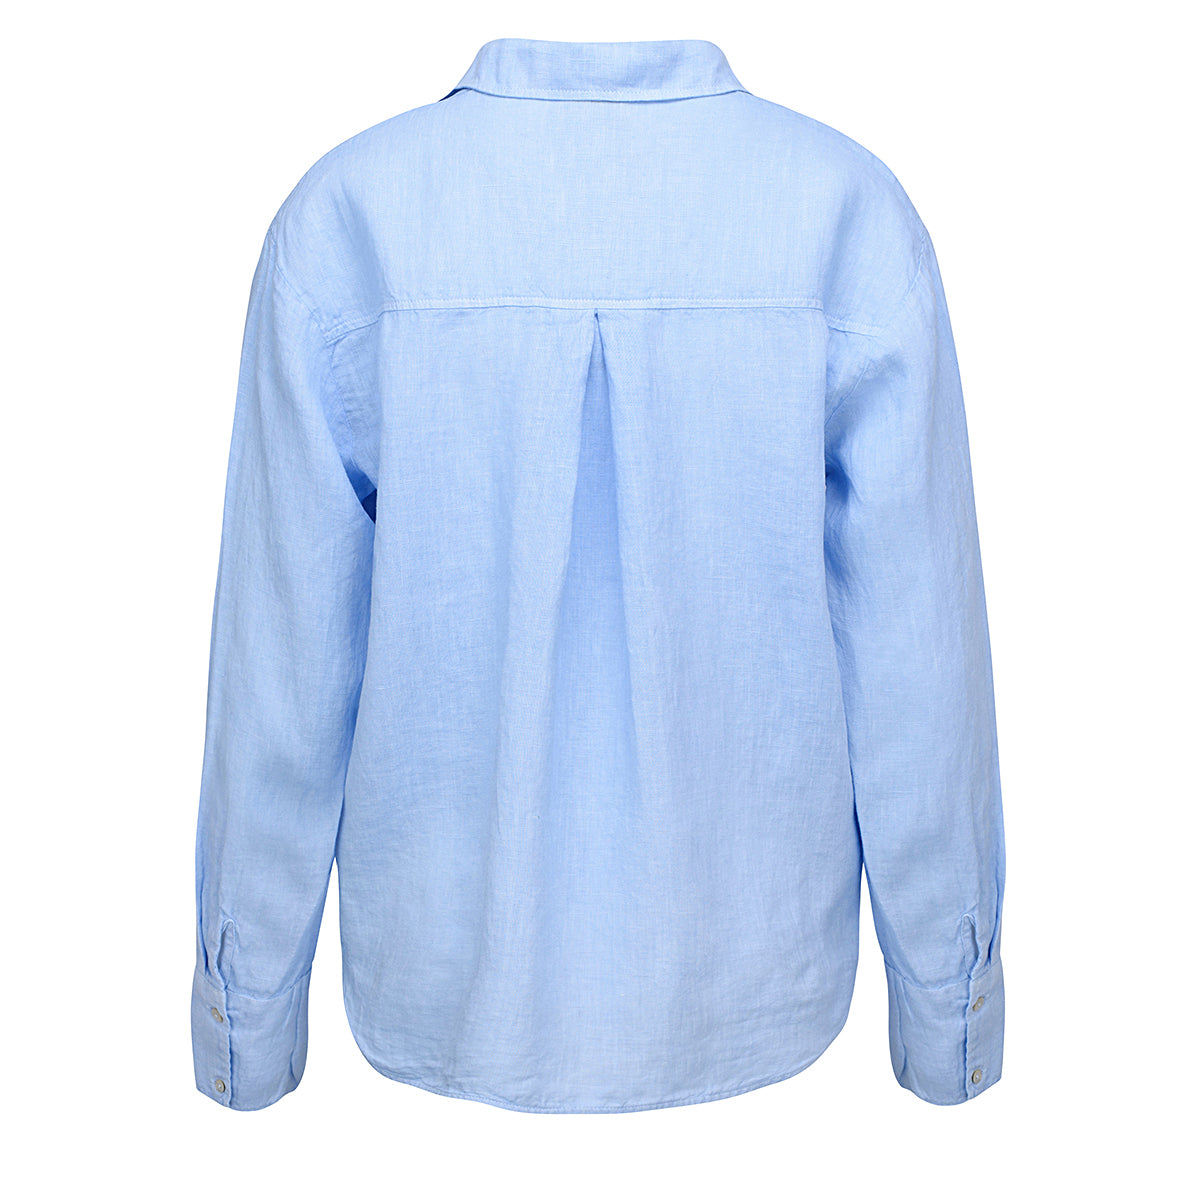 LUXZUZ // ONE TWO Kitt Shirt Shirt 510 Chambray Blue